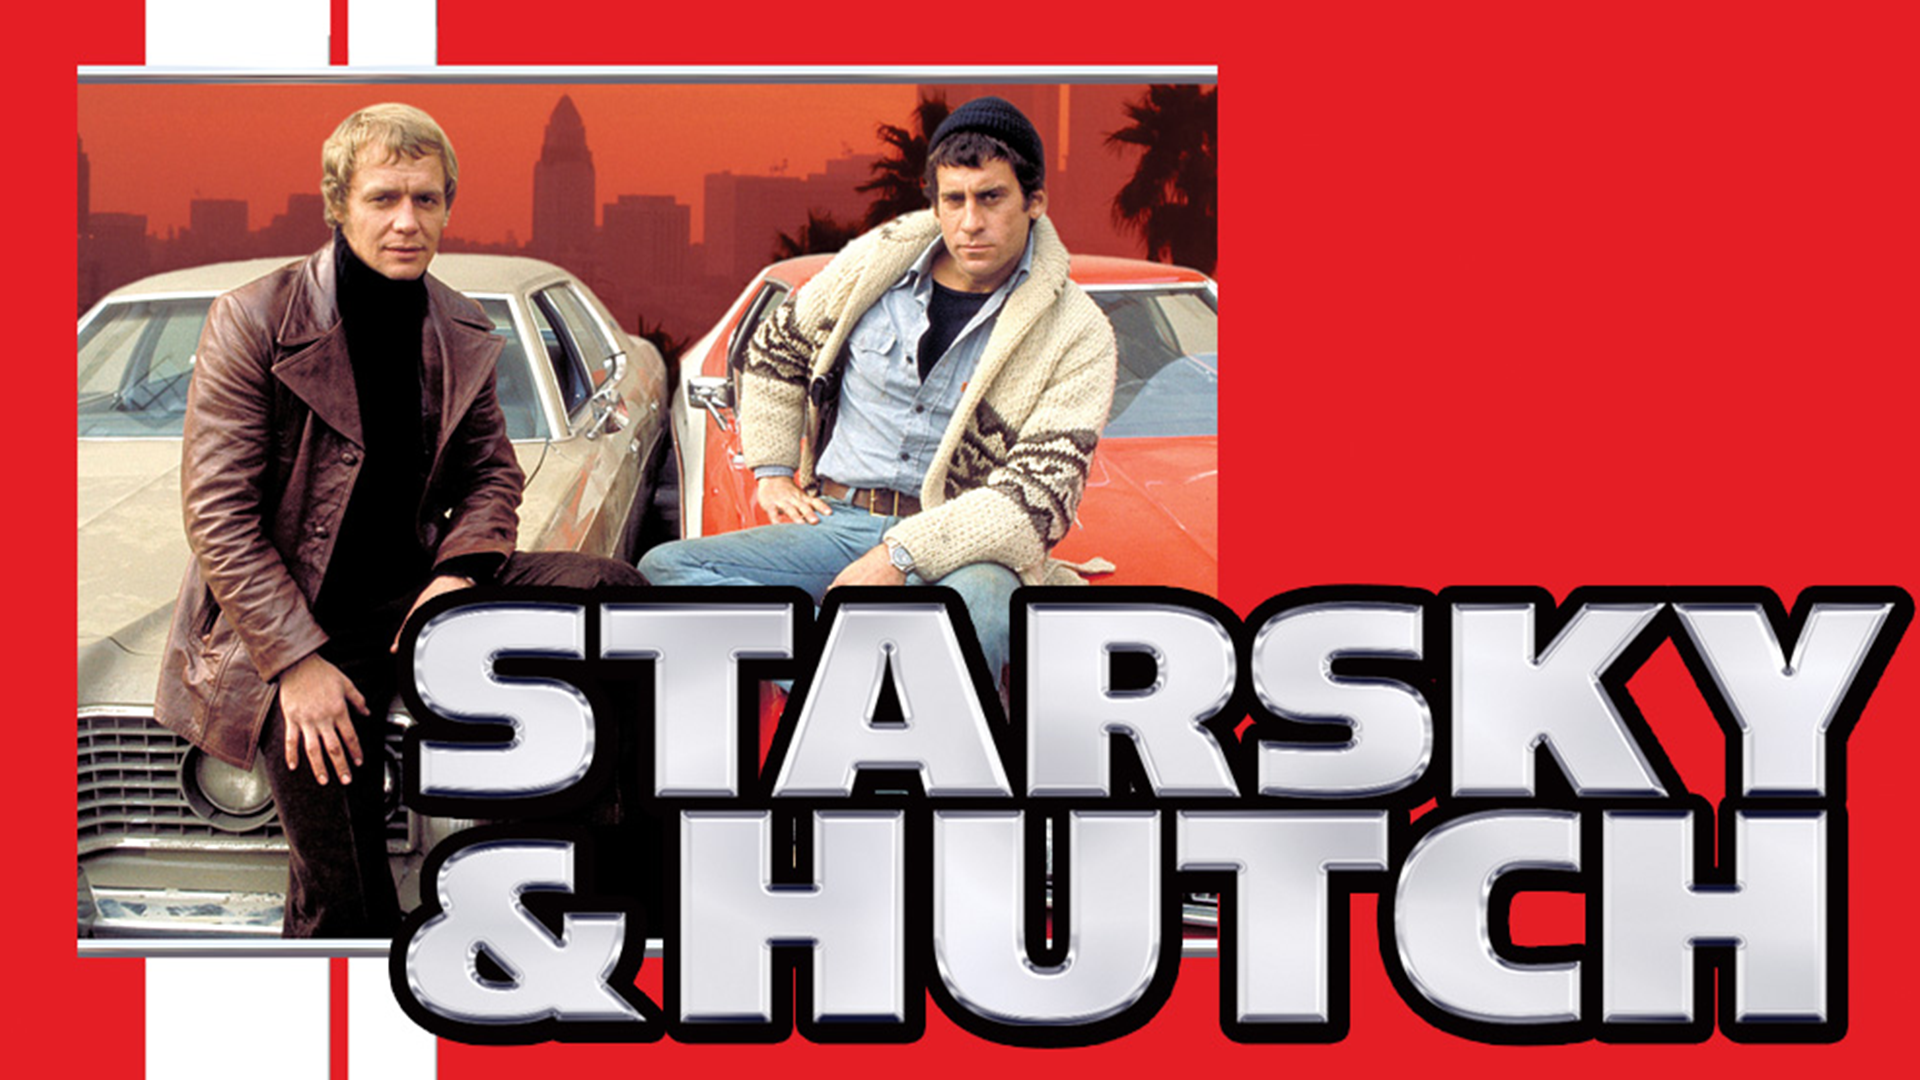 Comment se termine la série Starsky & Hutch